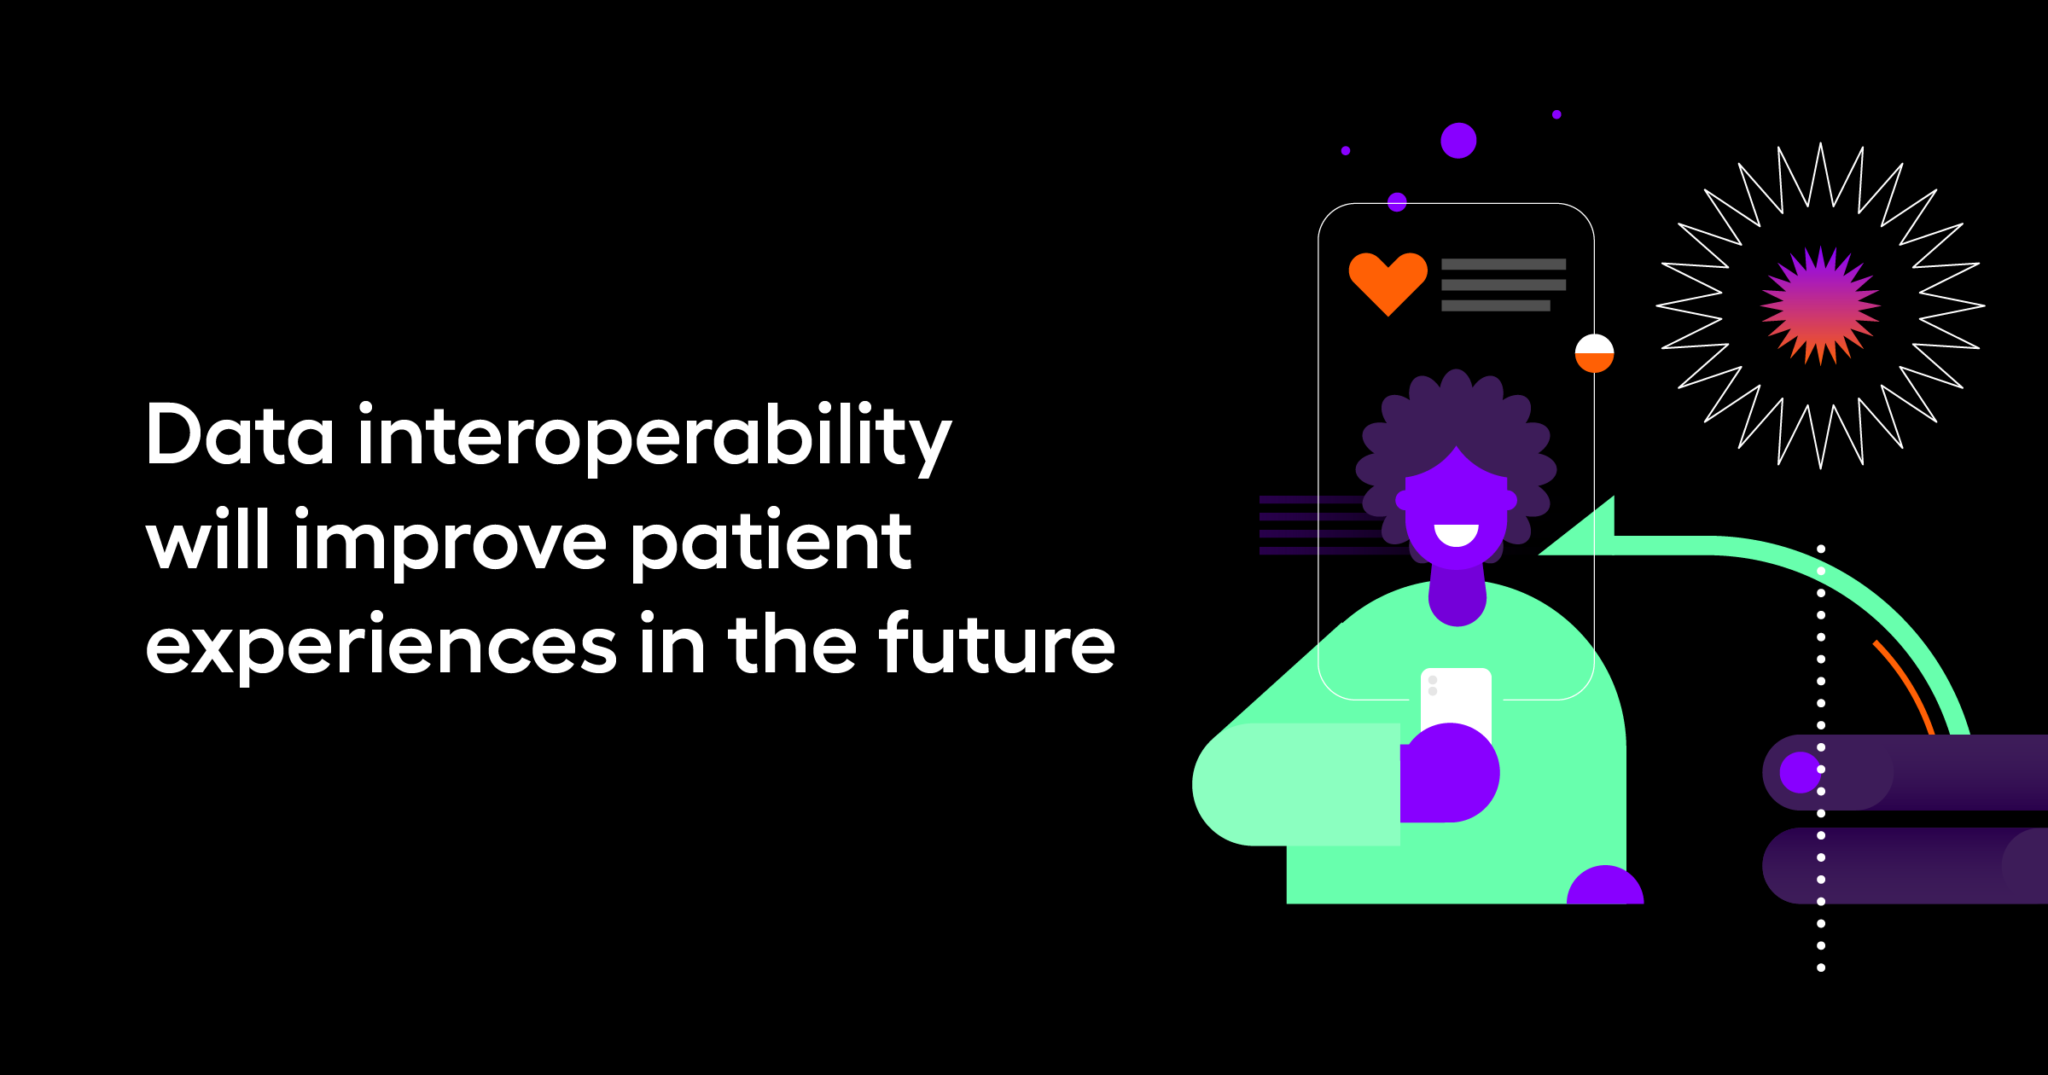 Data interoperability will improve patient experiences in the future